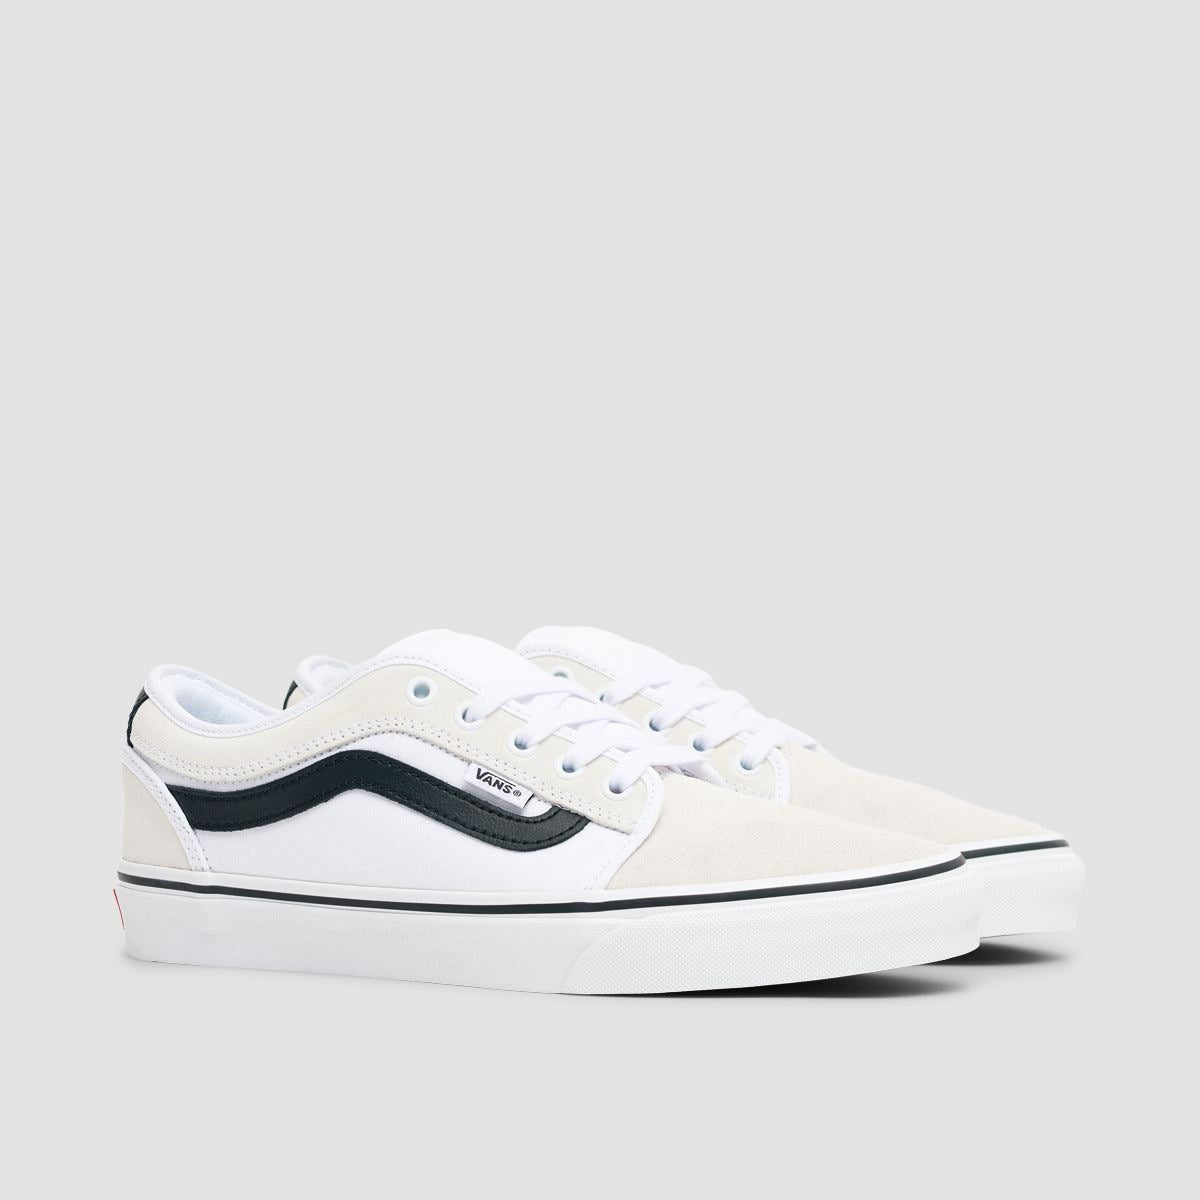 Vans Chukka Low Sidestripe Shoes - White/Black/Gum